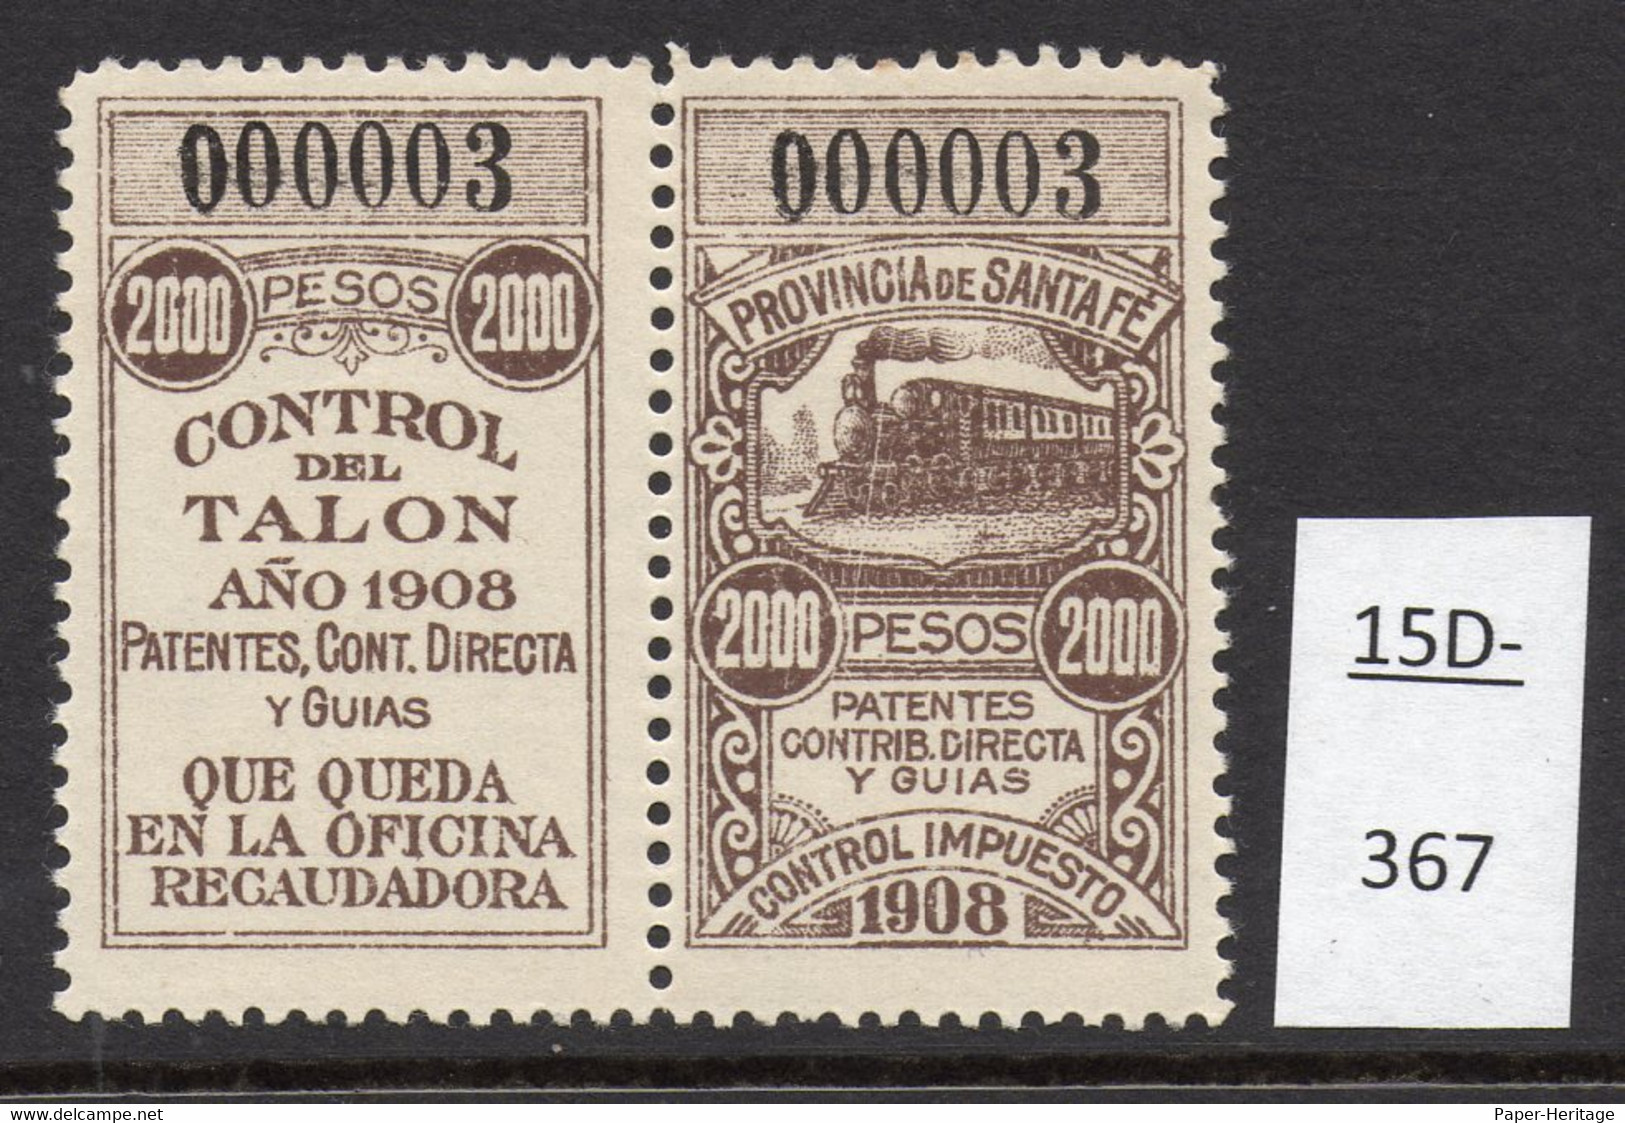 Argentina 1908 Santa Fe Revenue Steam Train – Railway – Locomotive 2000 Pesos With Talon MH - Neufs